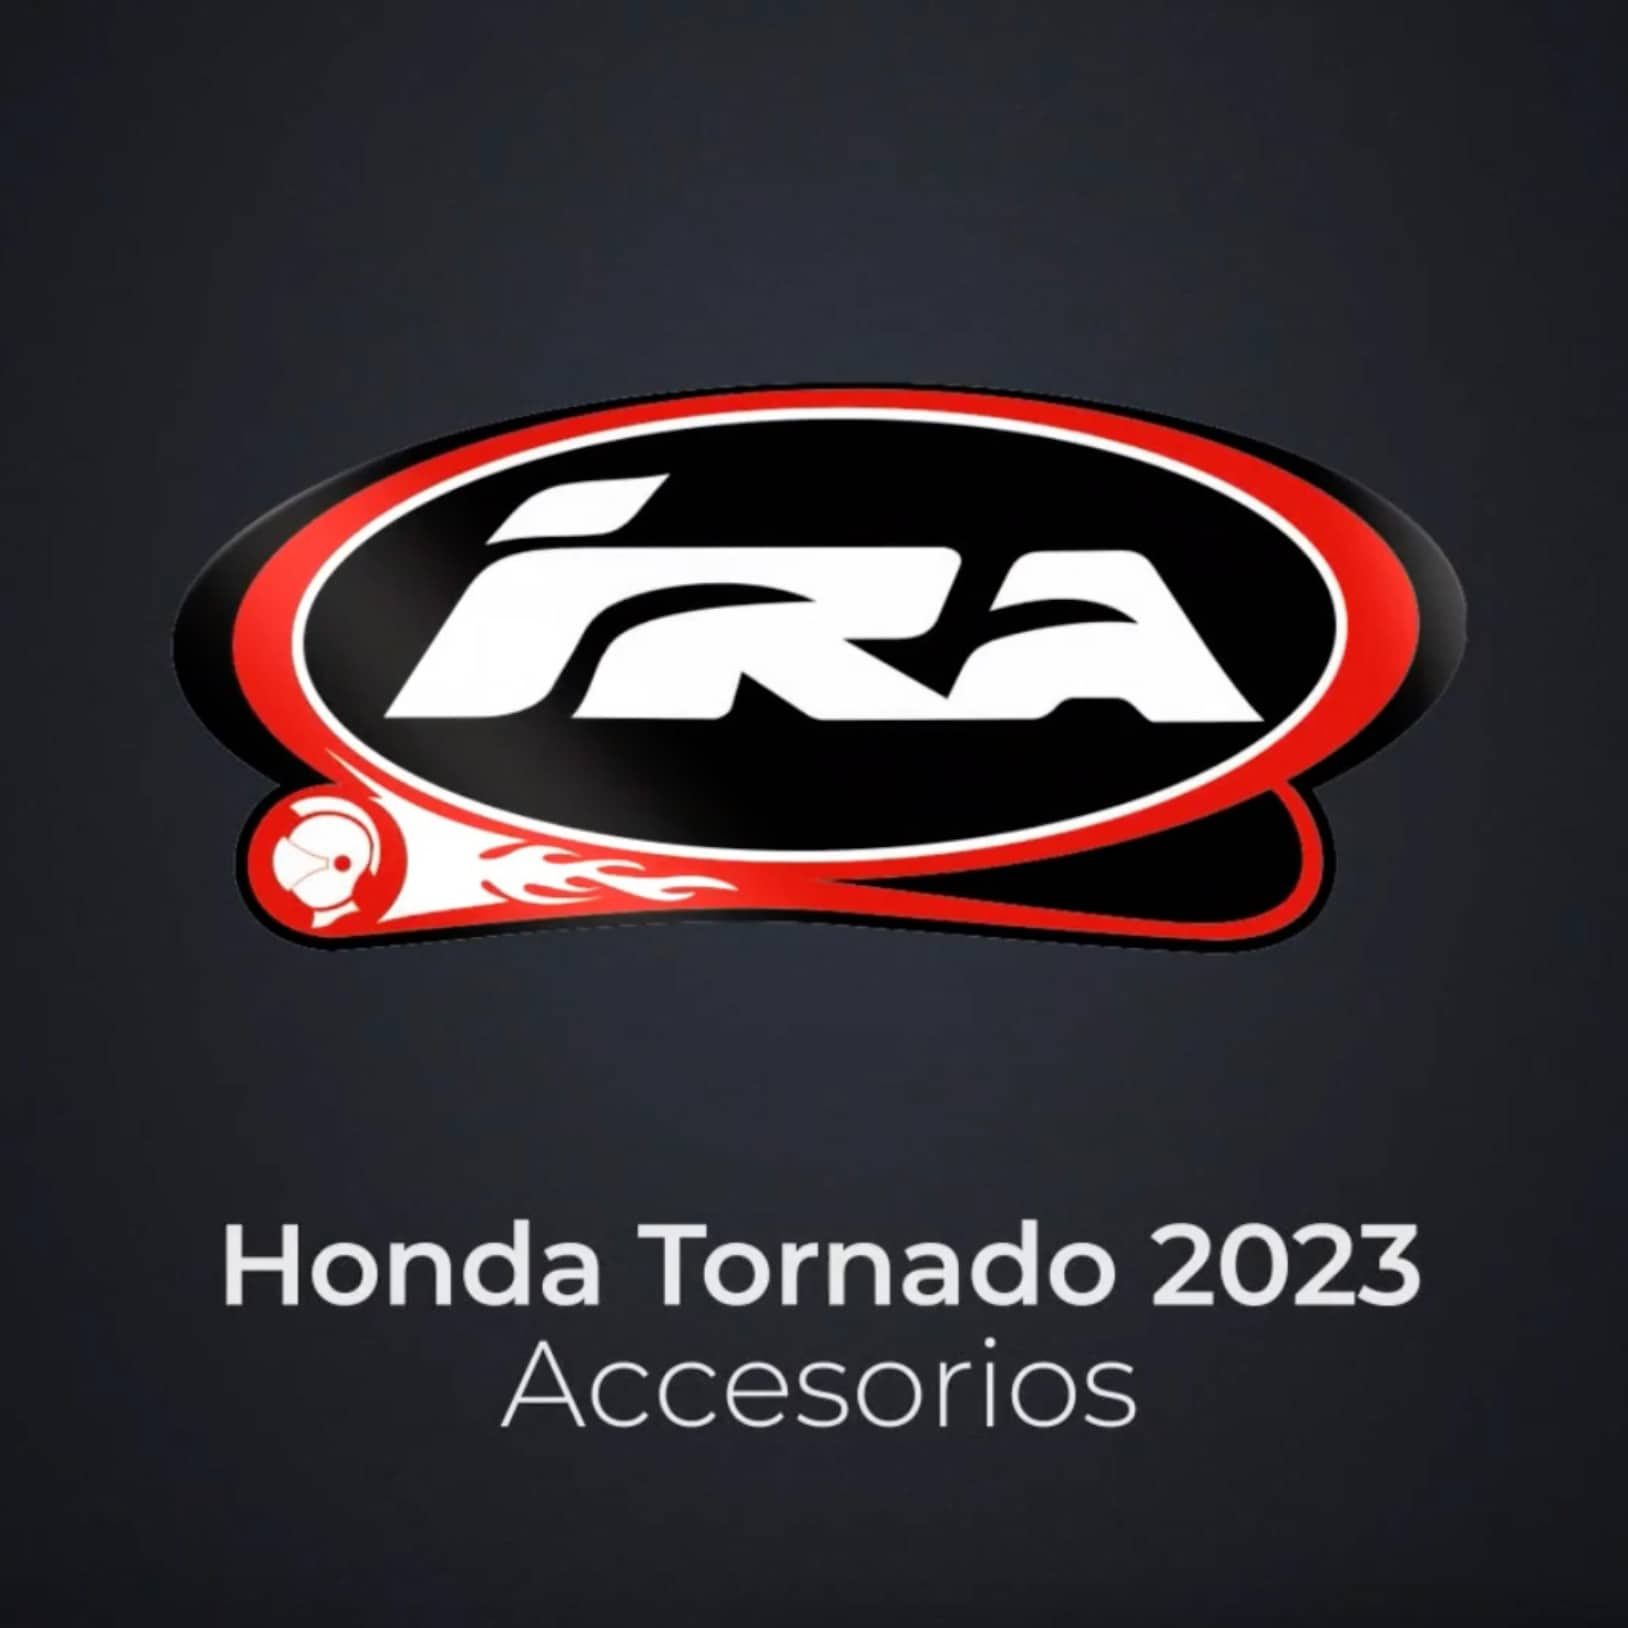 Accesorios diseñados para Honda Tornado 2023